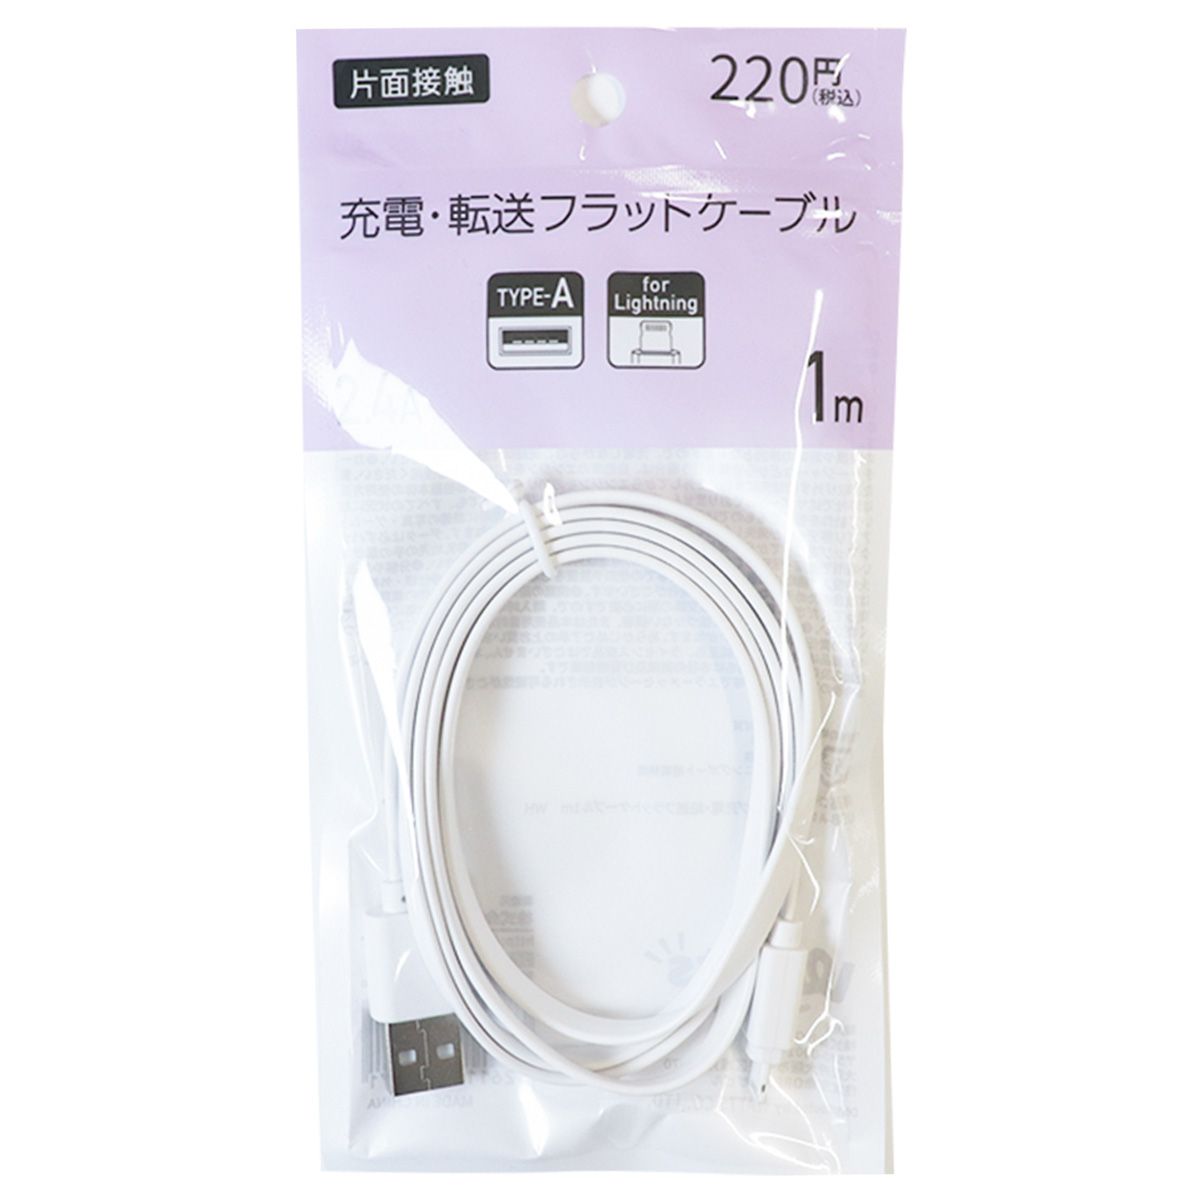 PB.USB-Atoライトニング充電･転送フラットケーブル1m ホワイト  1450/053367